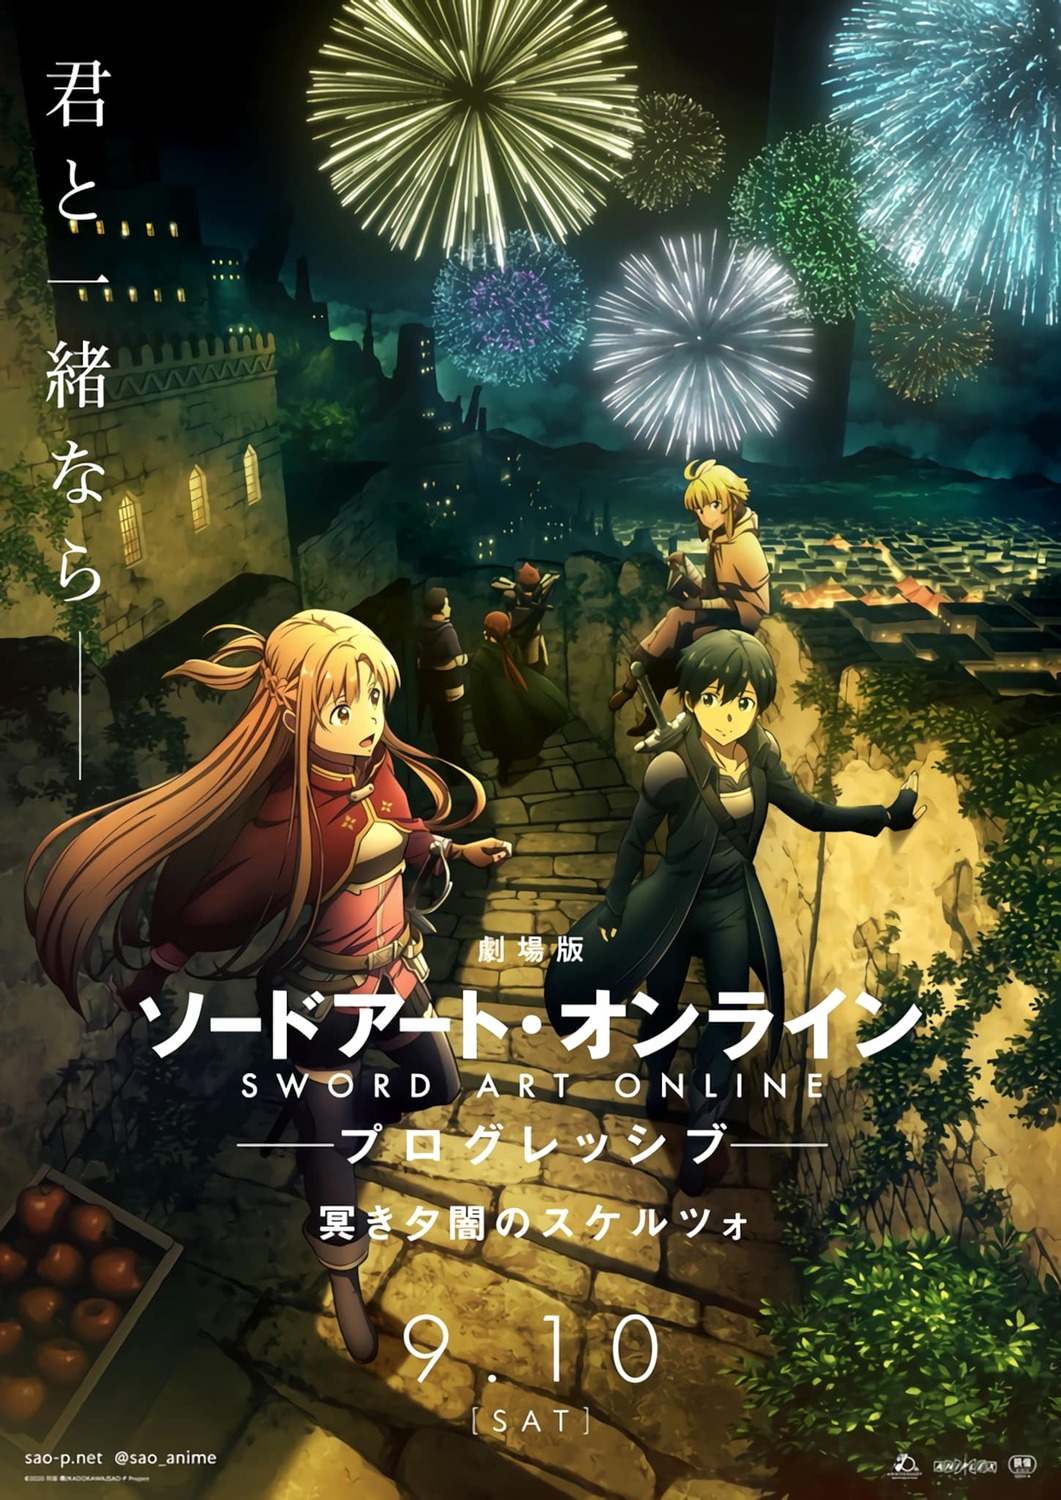 Extra Large Movie Poster Image for Gekijouban Sword Art Online the Movie: Progressive - Kuraki Yuuyami no Scherzo (#3 of 3)